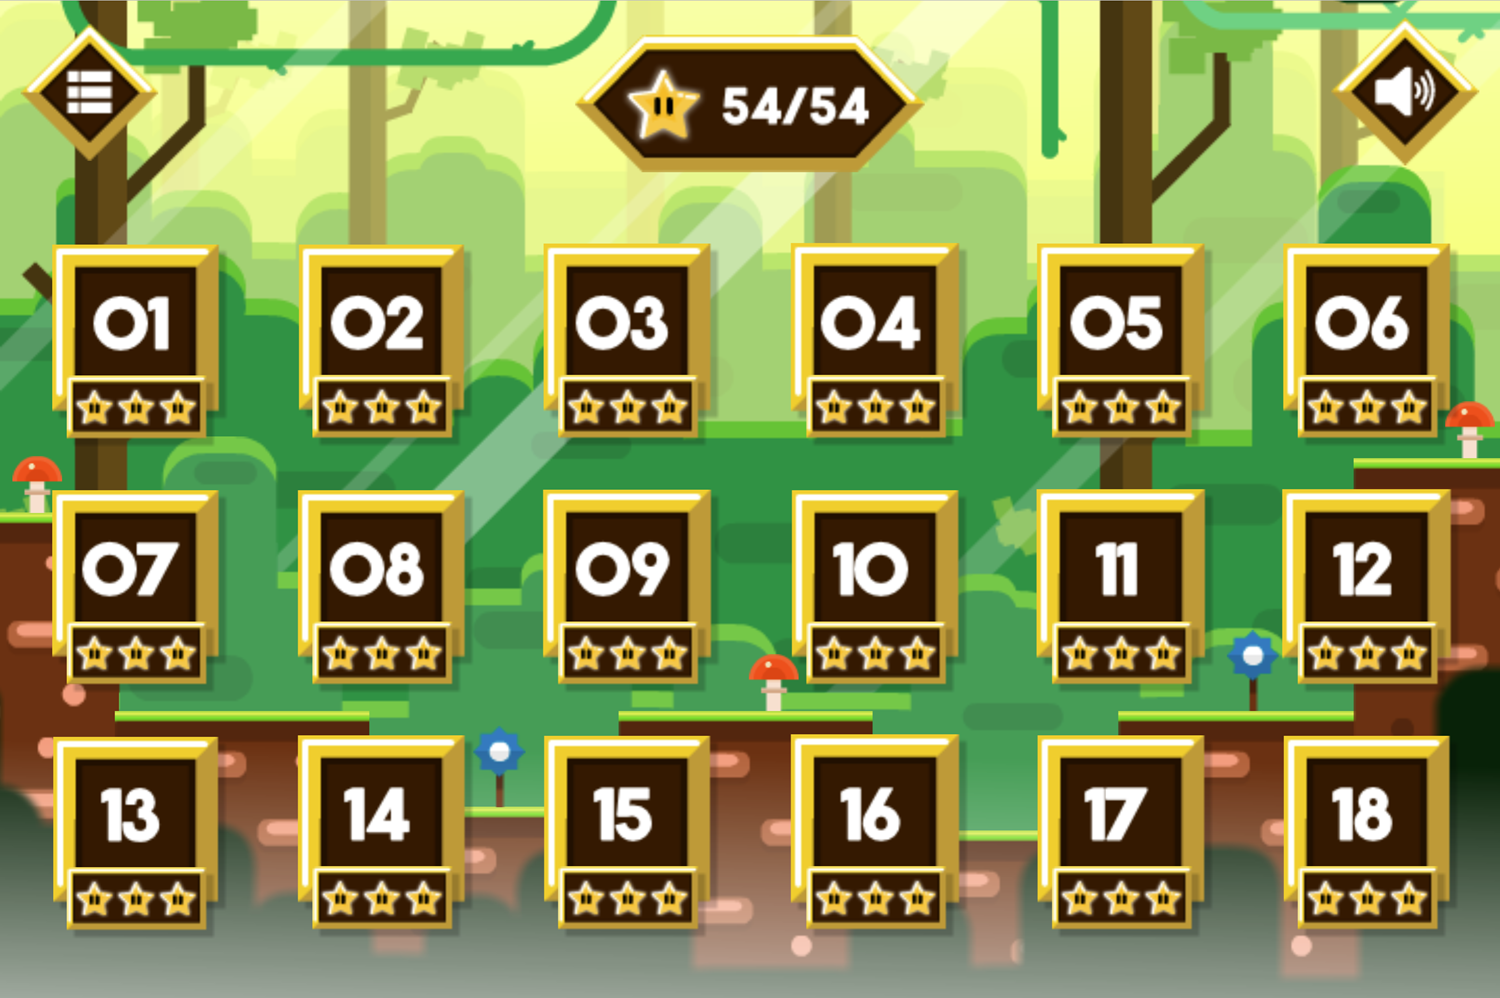 Yellow Ball Adventure Game Level Select Screen Screenshot.